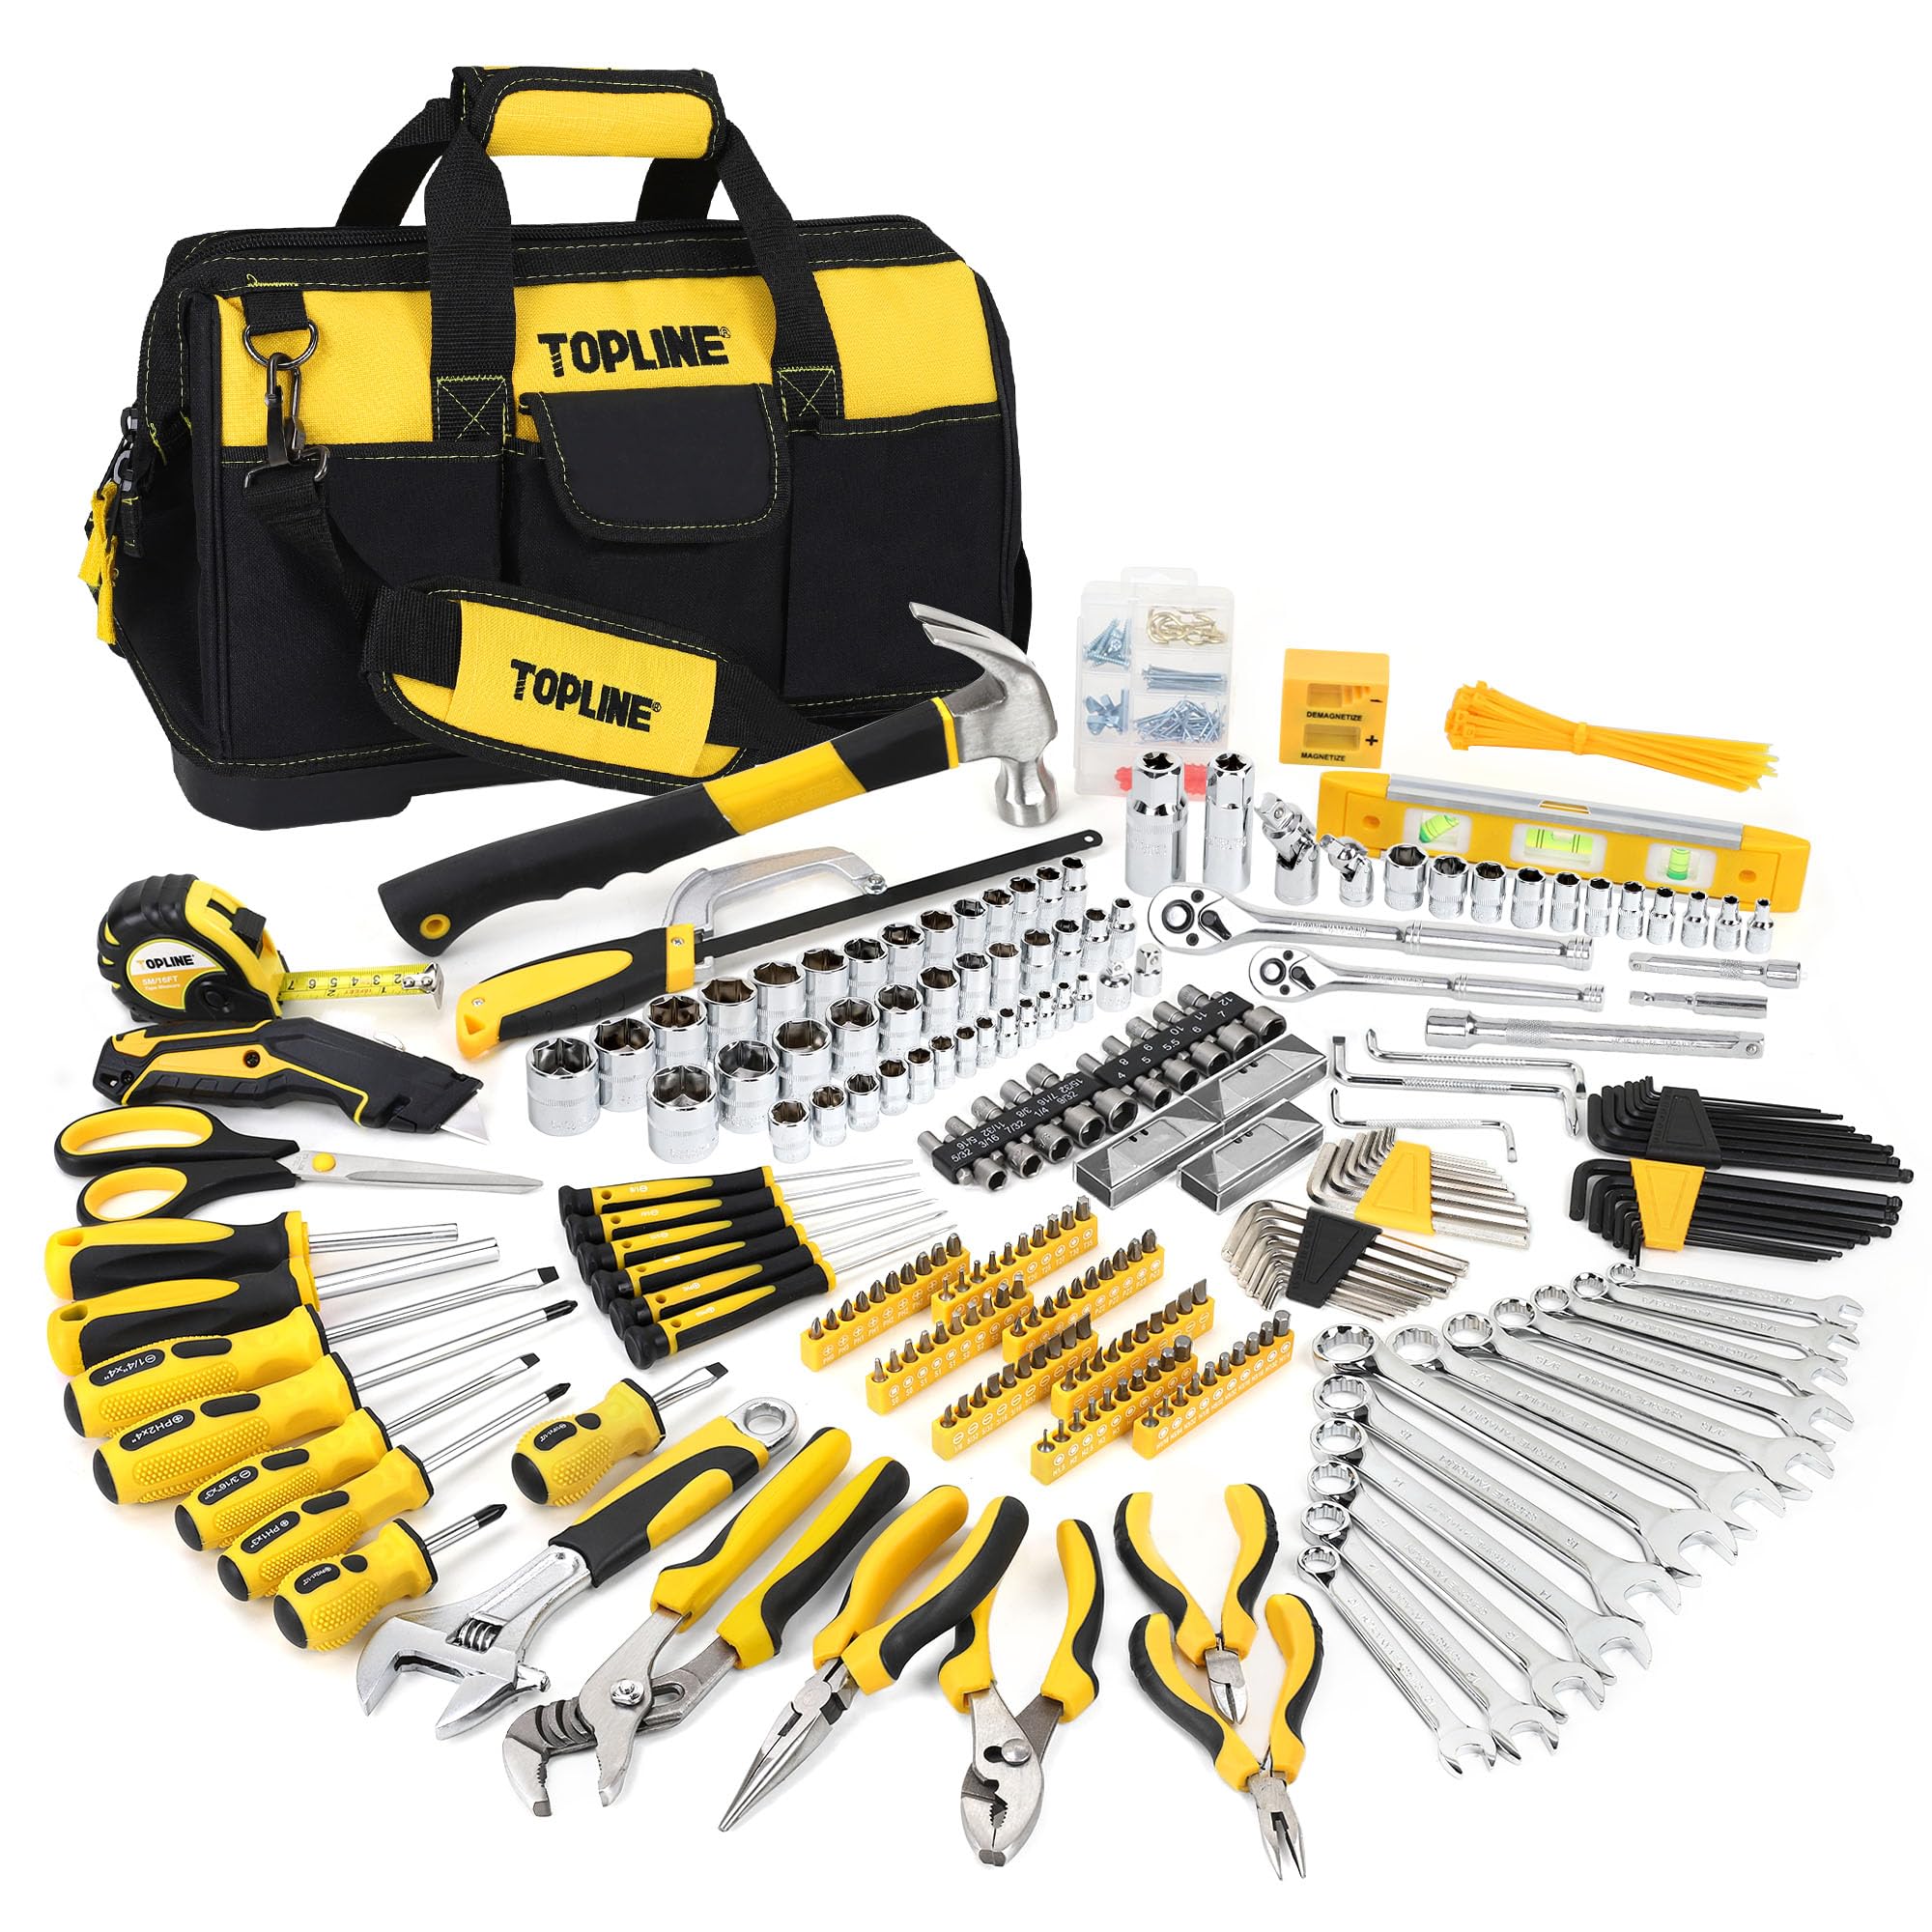 TOPLINE 467-Piece Household Home Tool Sets for Mechanics, 16-Inch Tool Bag with Heavy Duty Home Tool Kit Included, Tool Sets for Men, Tool Kits for Home General Maintenance, Basic Applications